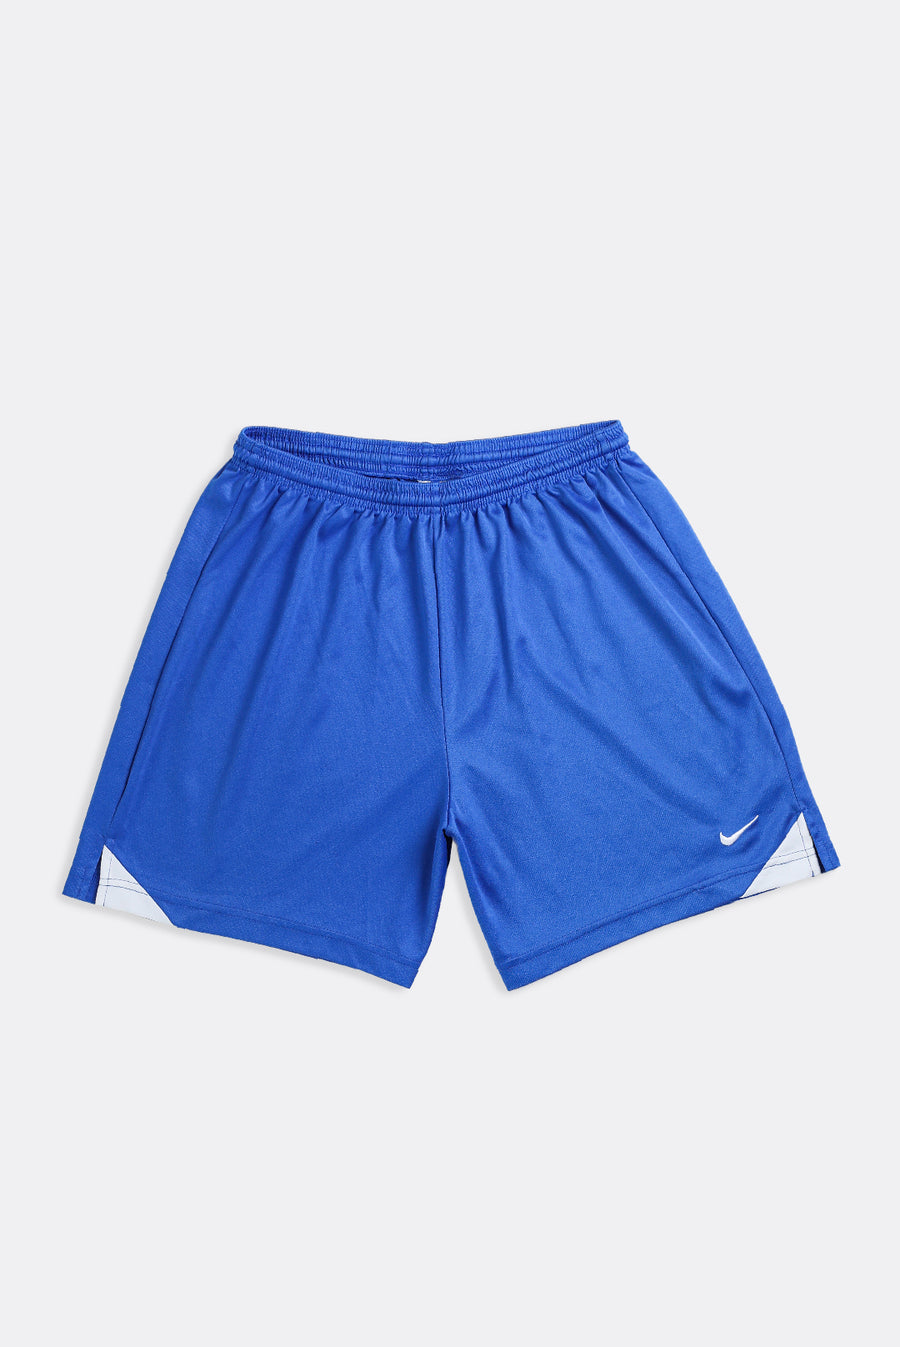 Deadstock Nike Shorts - S, M, L, XL